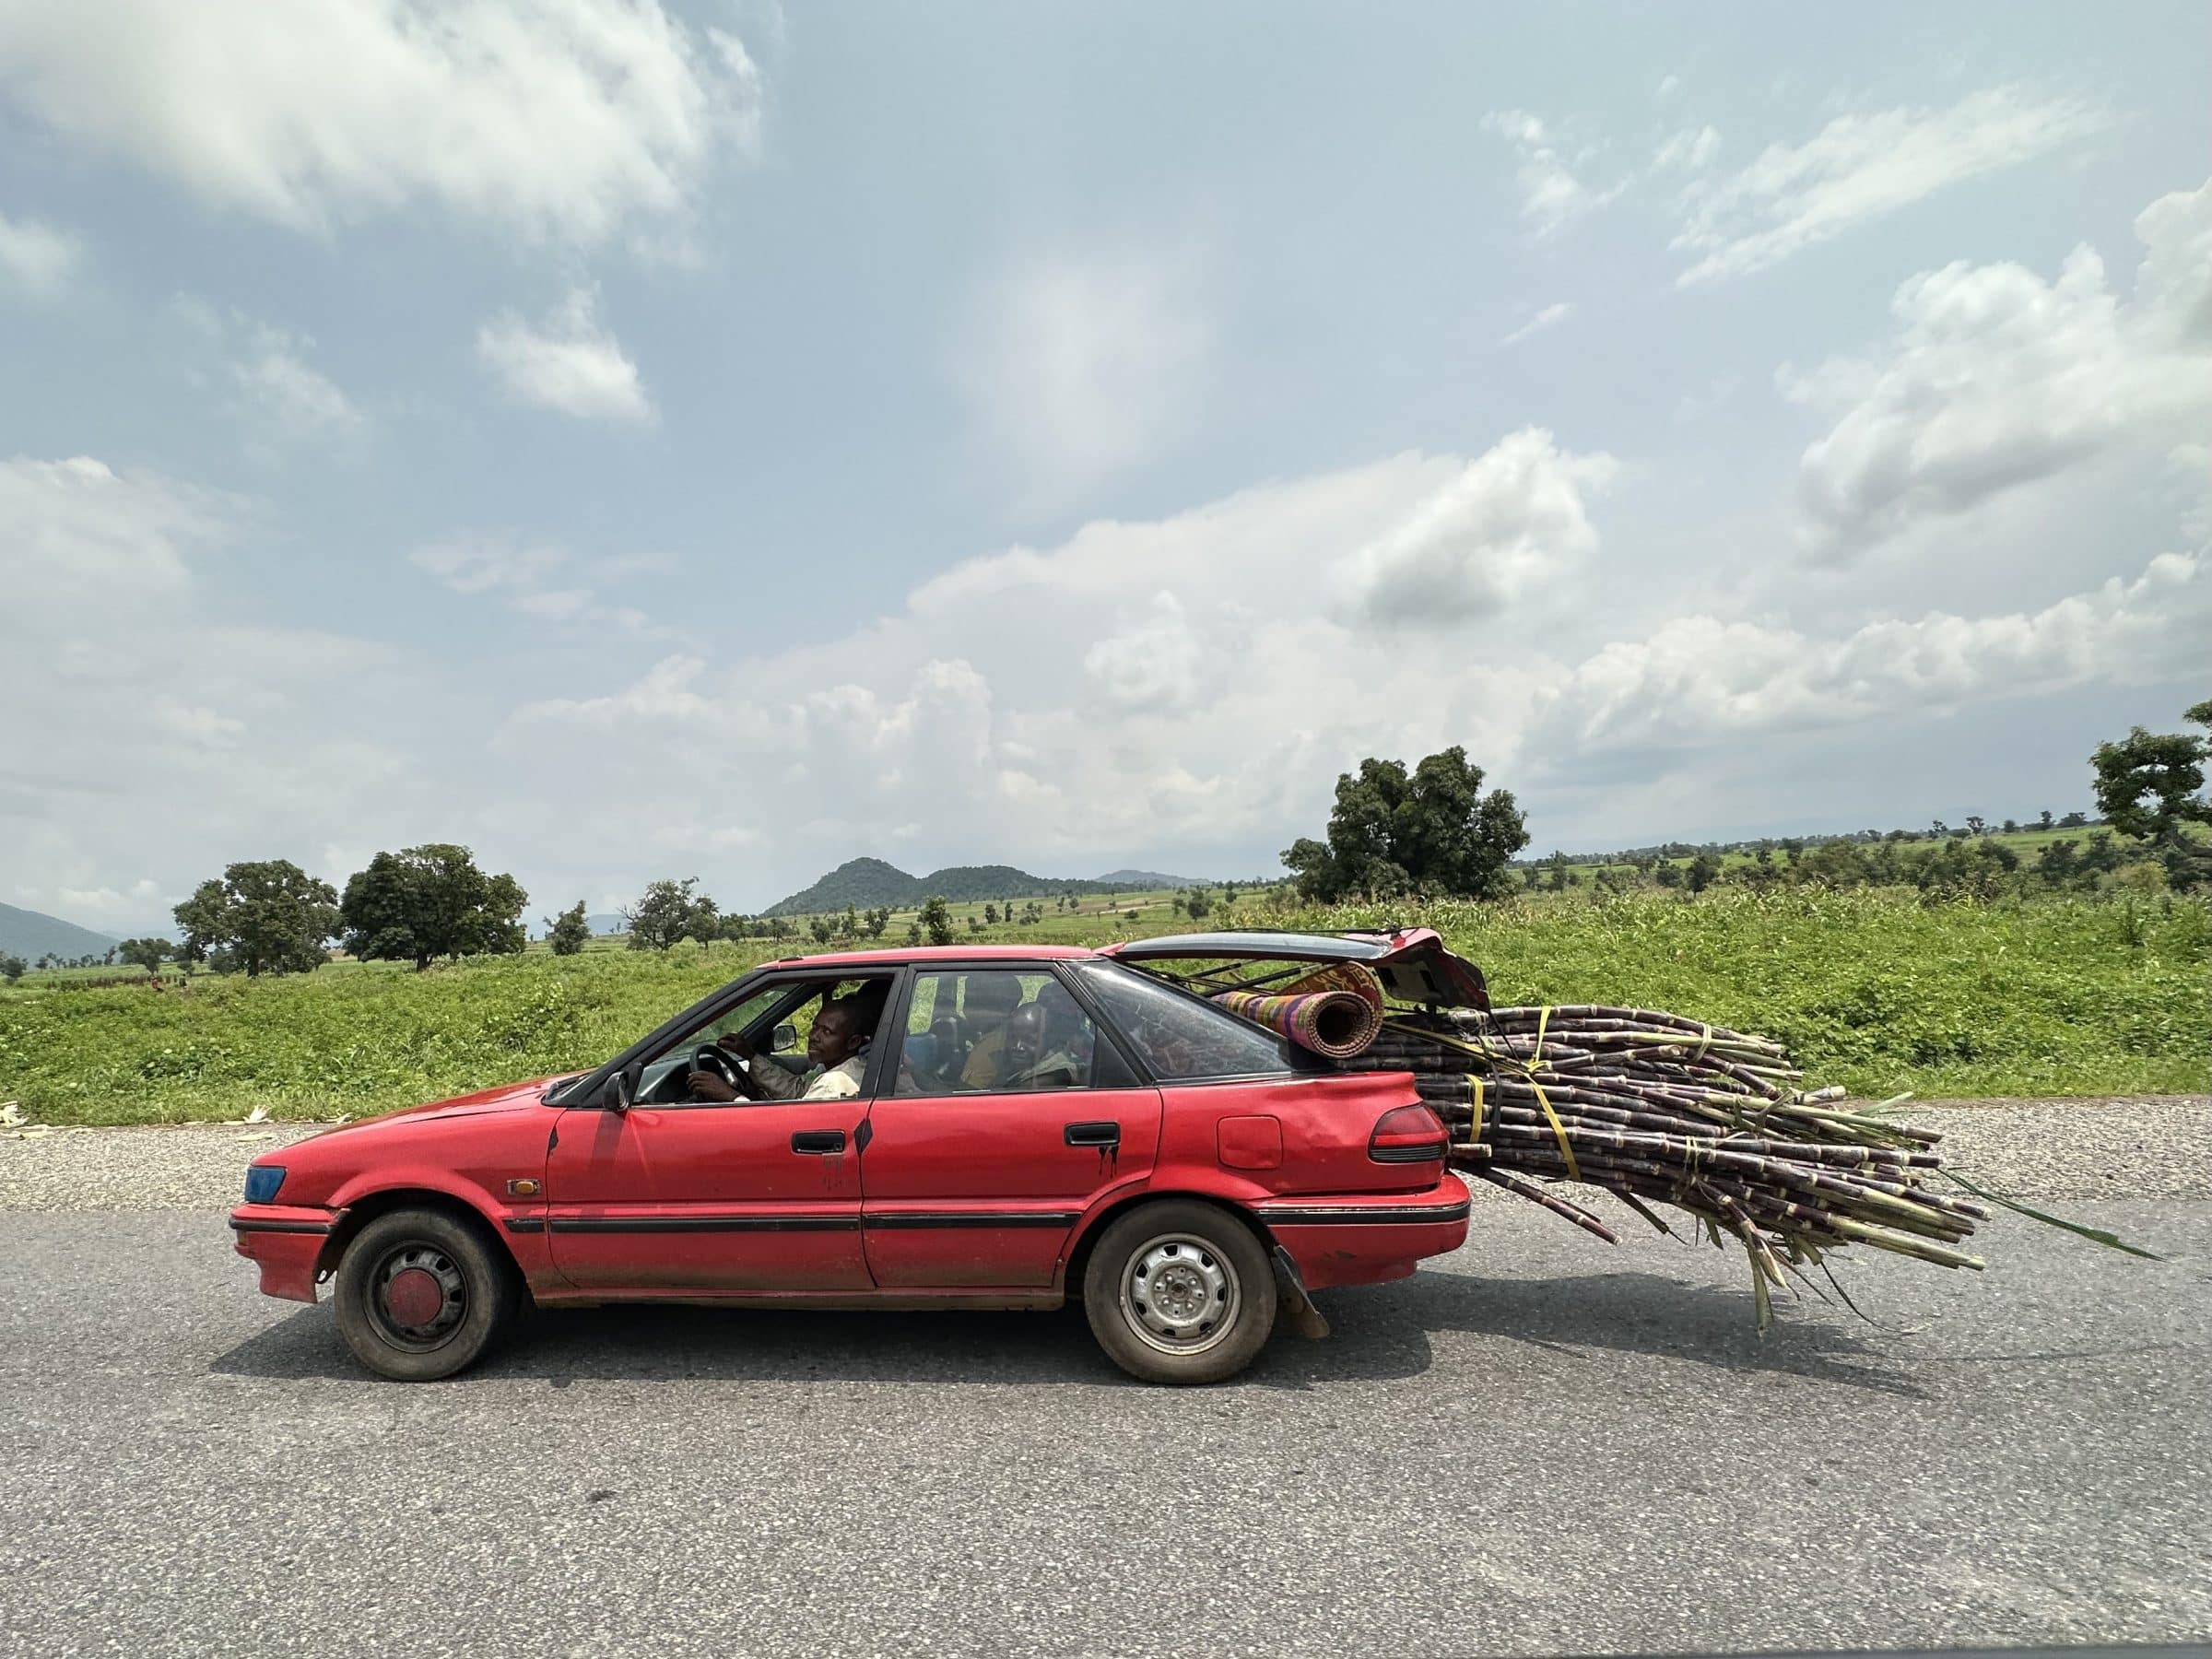 Transporting sugar cane